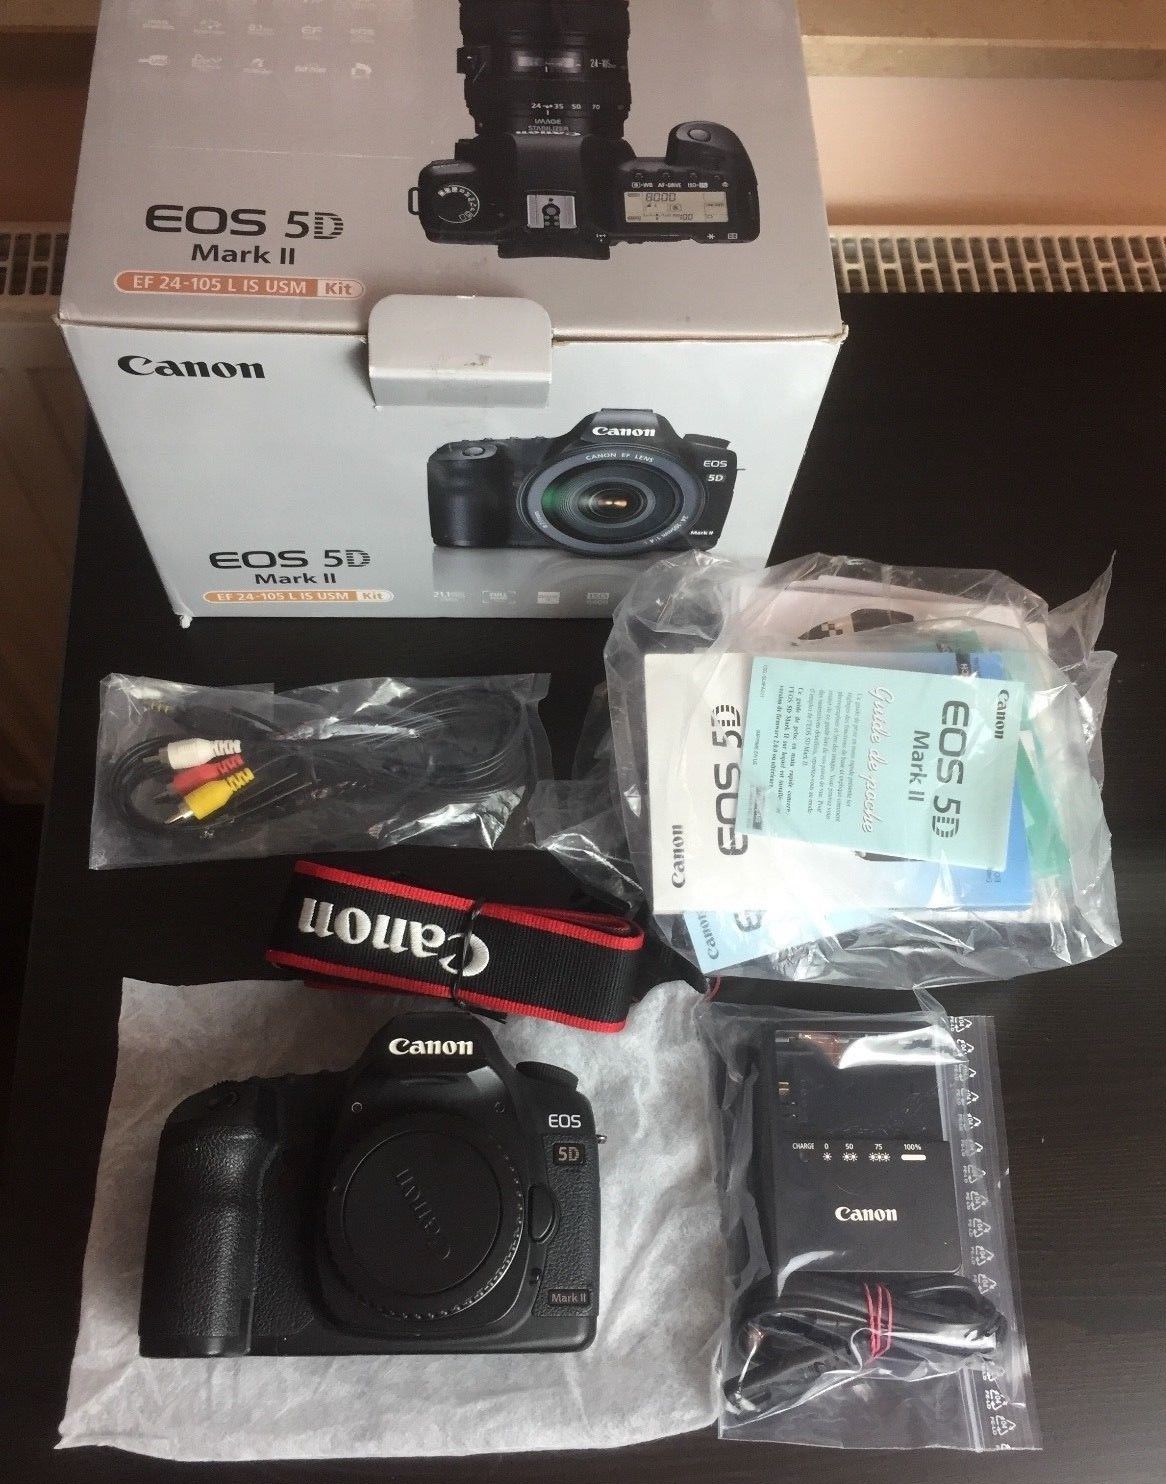 Canon EOS 5D Mark II 21.1MP Digitalkamera - Schwarz (EF 24-105 L IS USM Kit) 